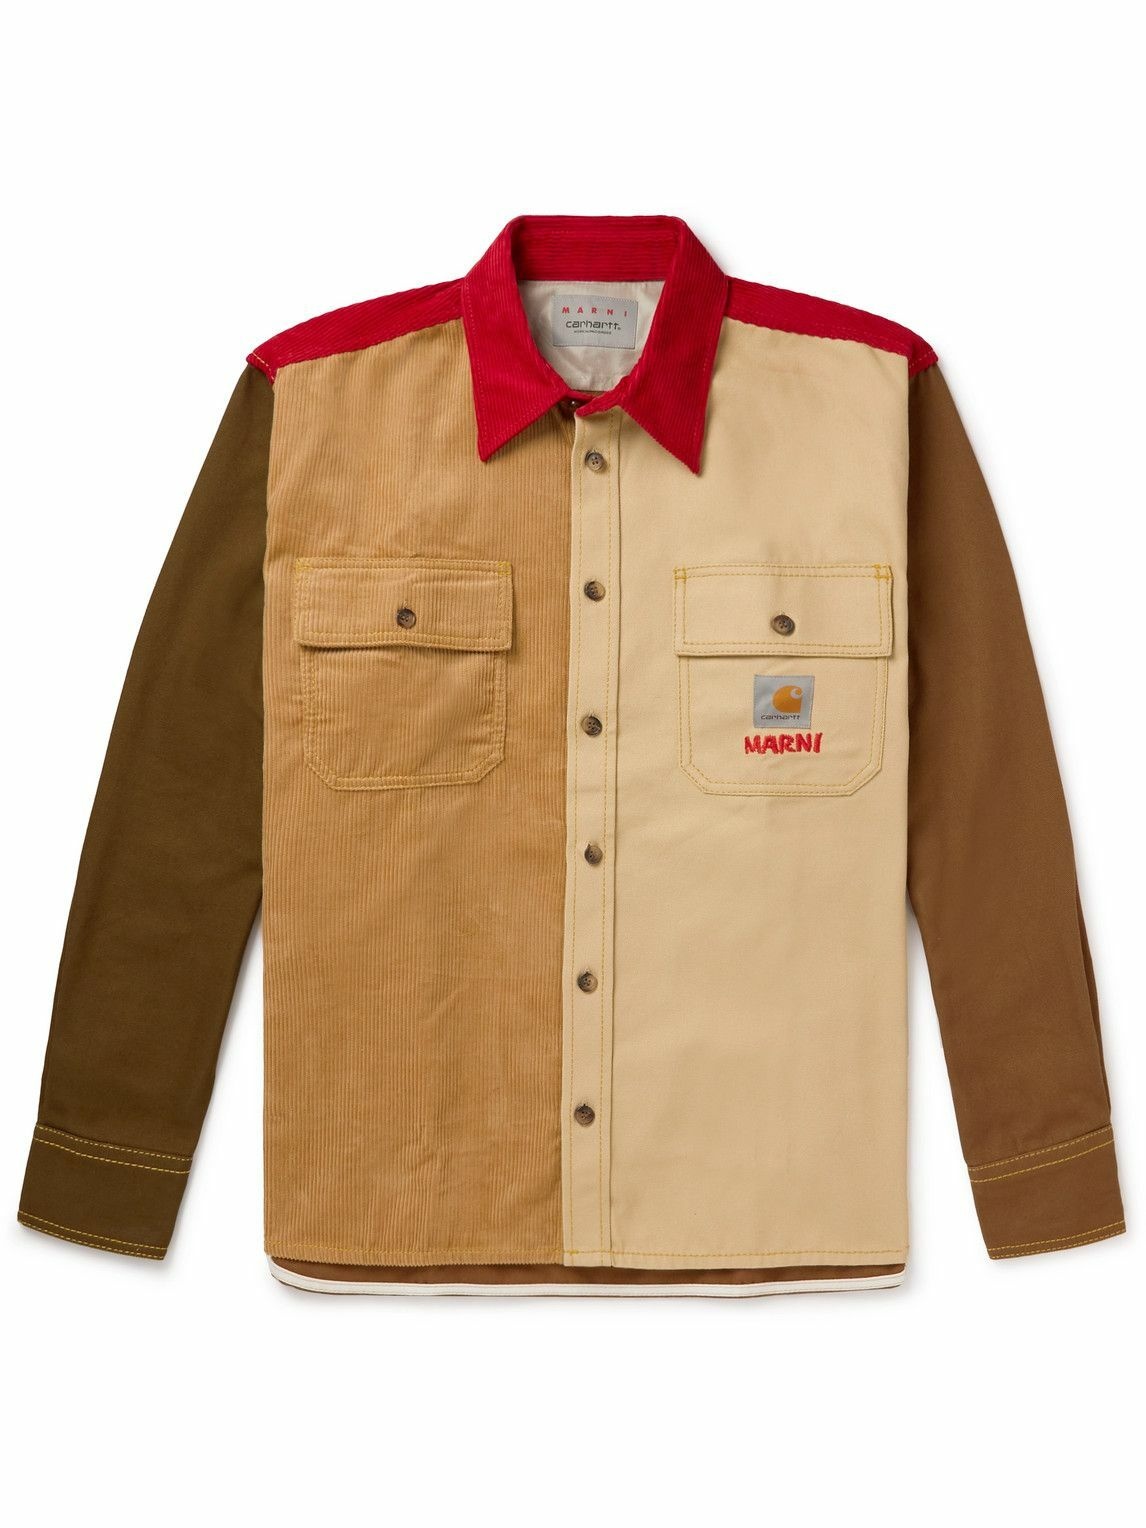 MARNI X CARHARTT - Colorblock Cotton Shirt Jacket